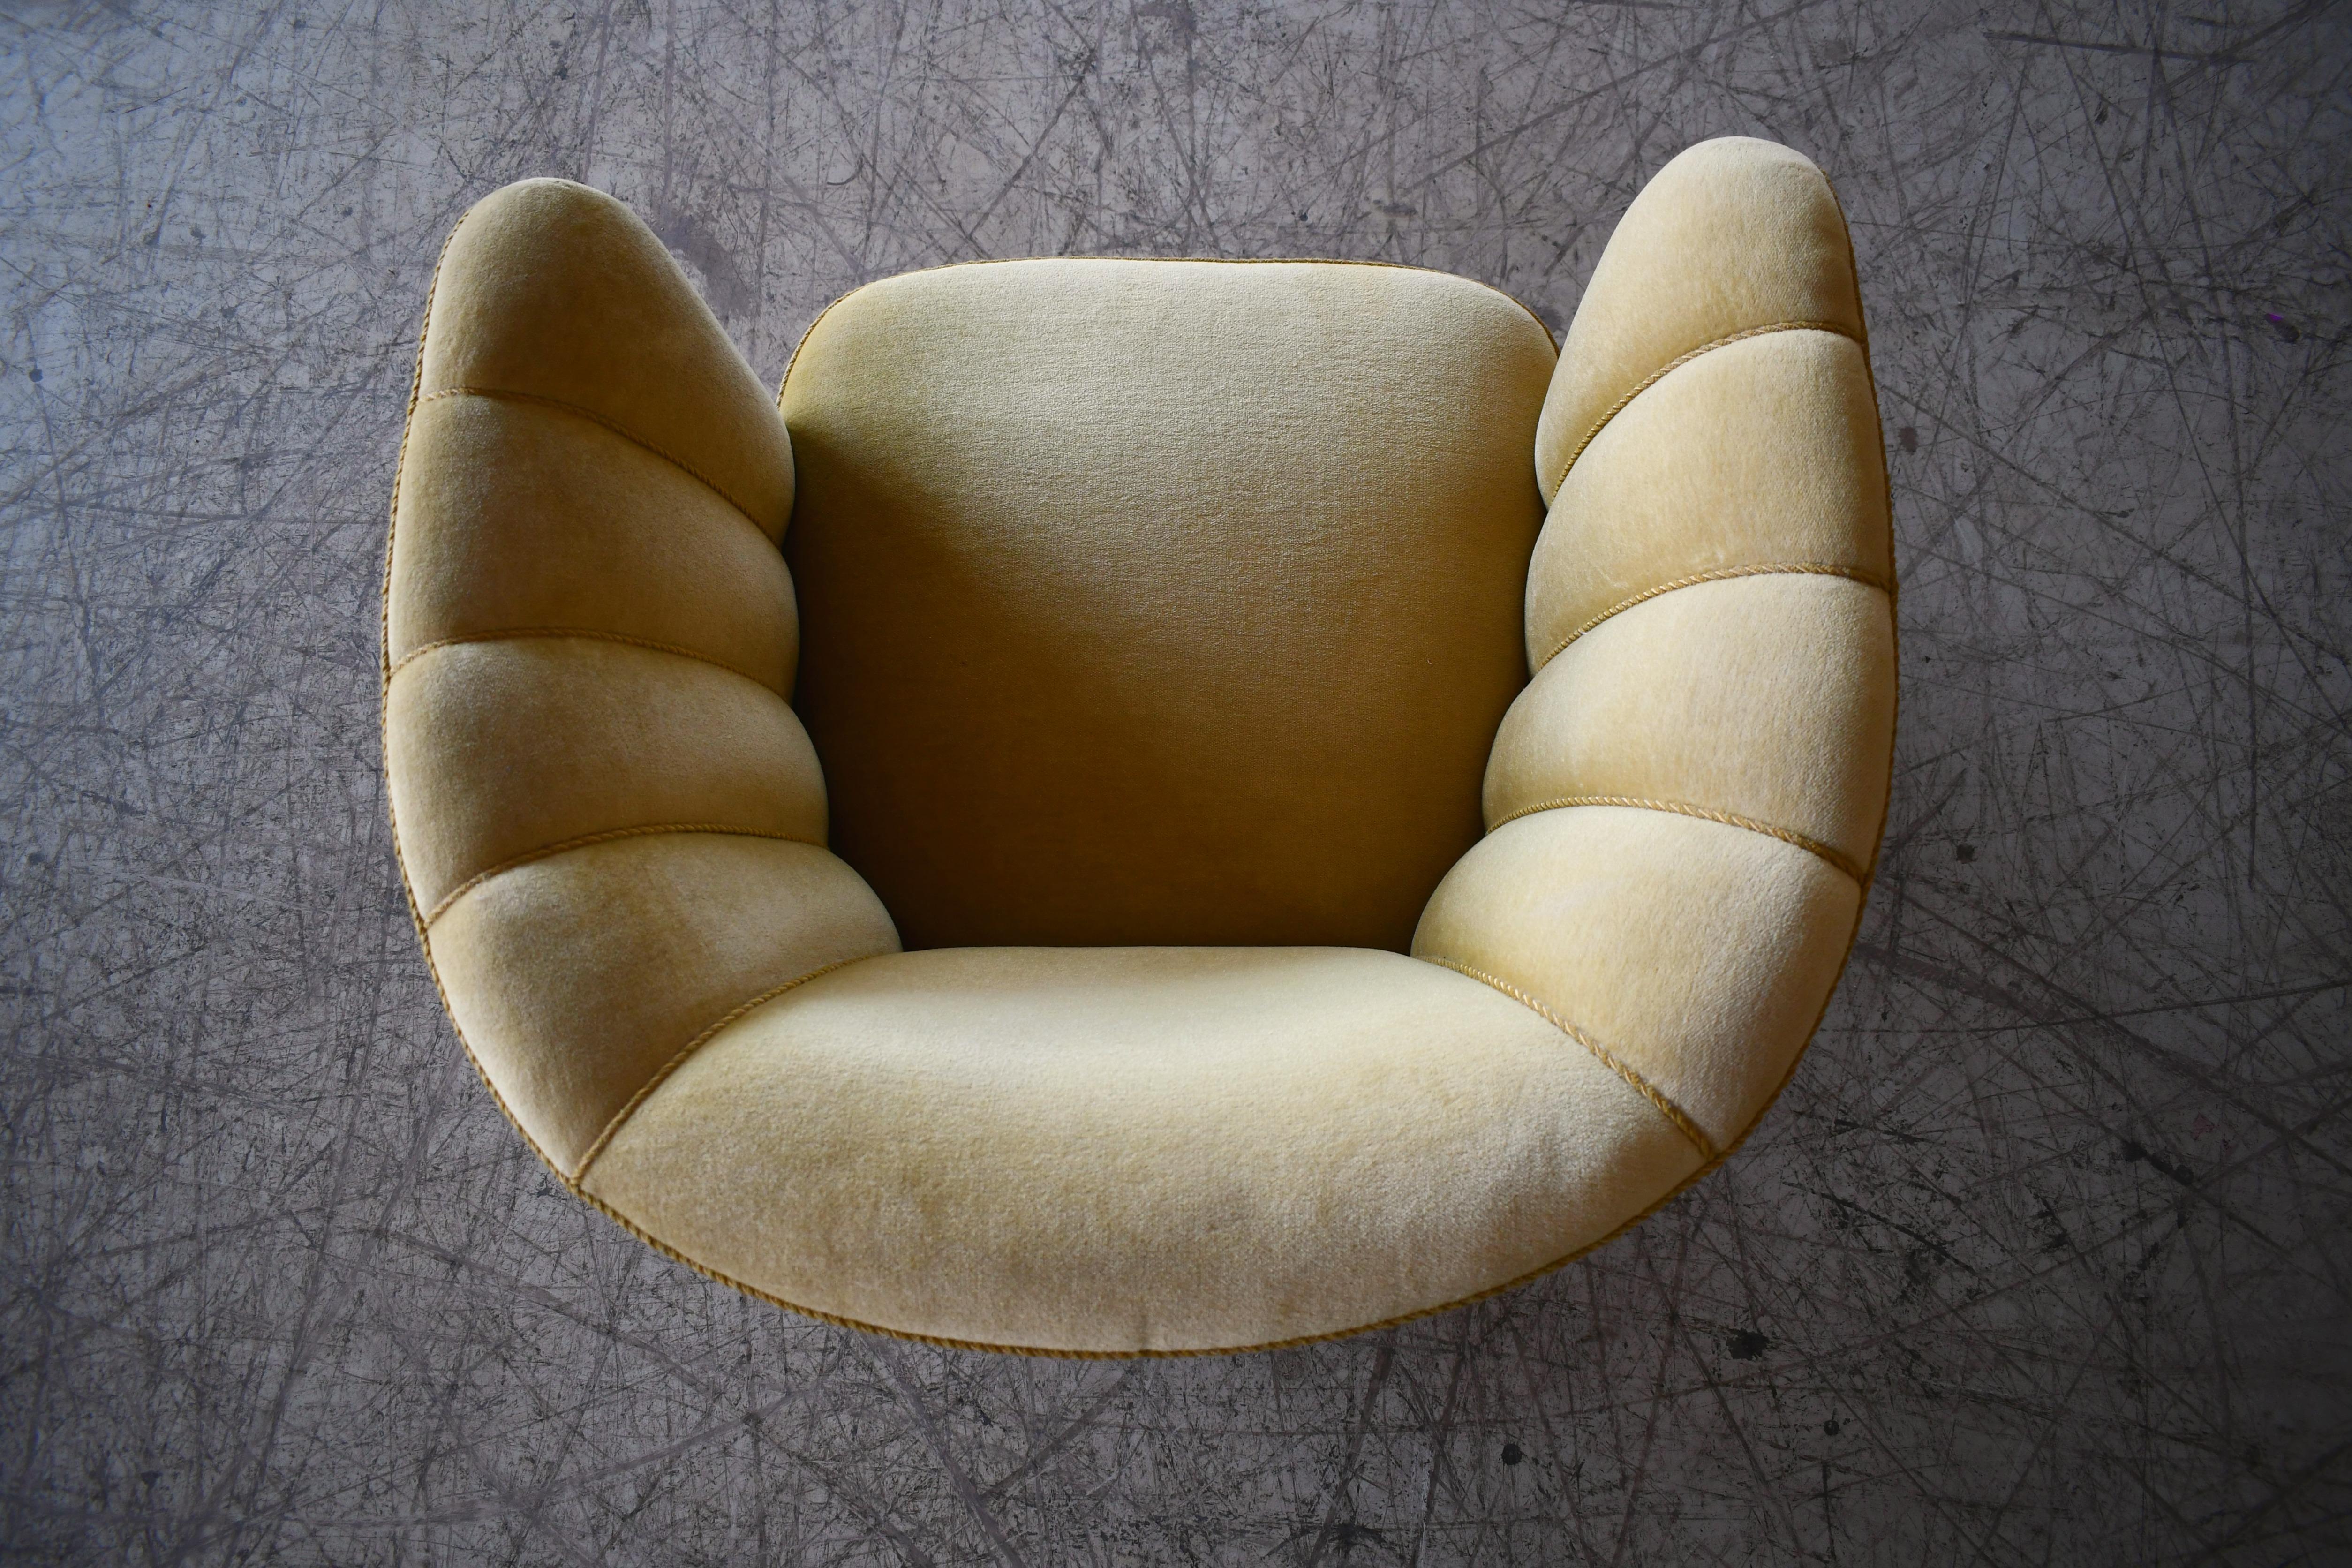 banana shaped chair